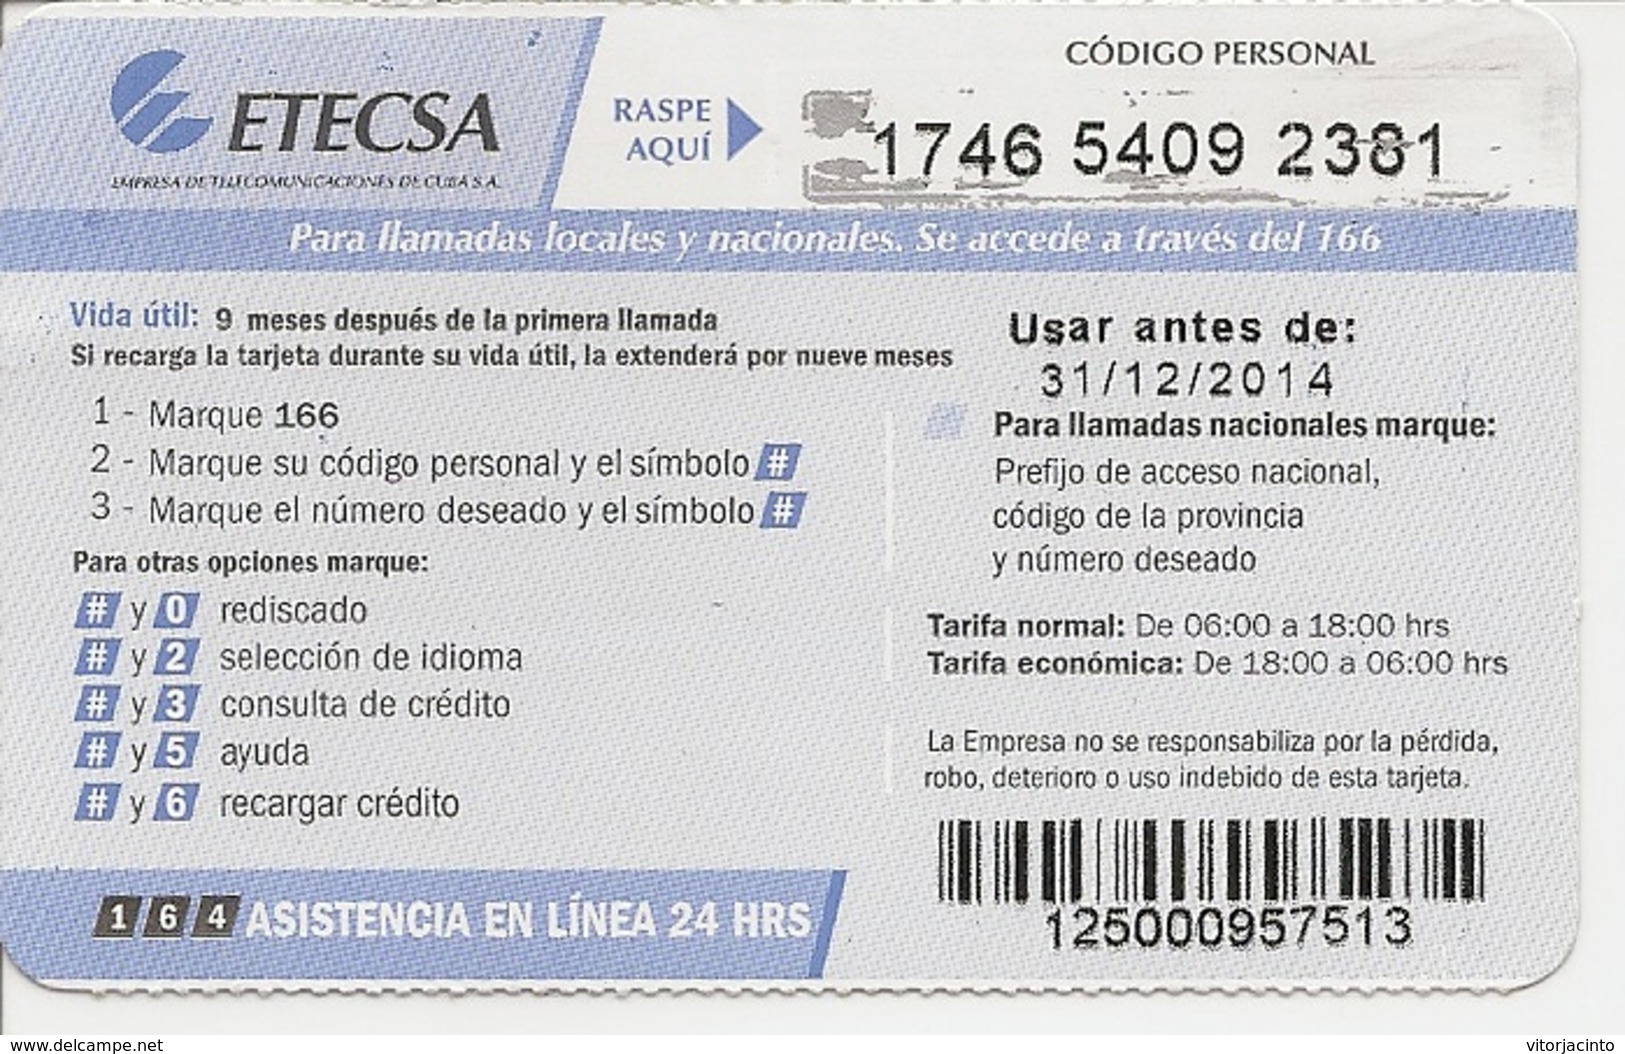 ETECSA Propia- Local And NationaL Phone Card Recharge 10.00 CUP - Cuba - Cuba